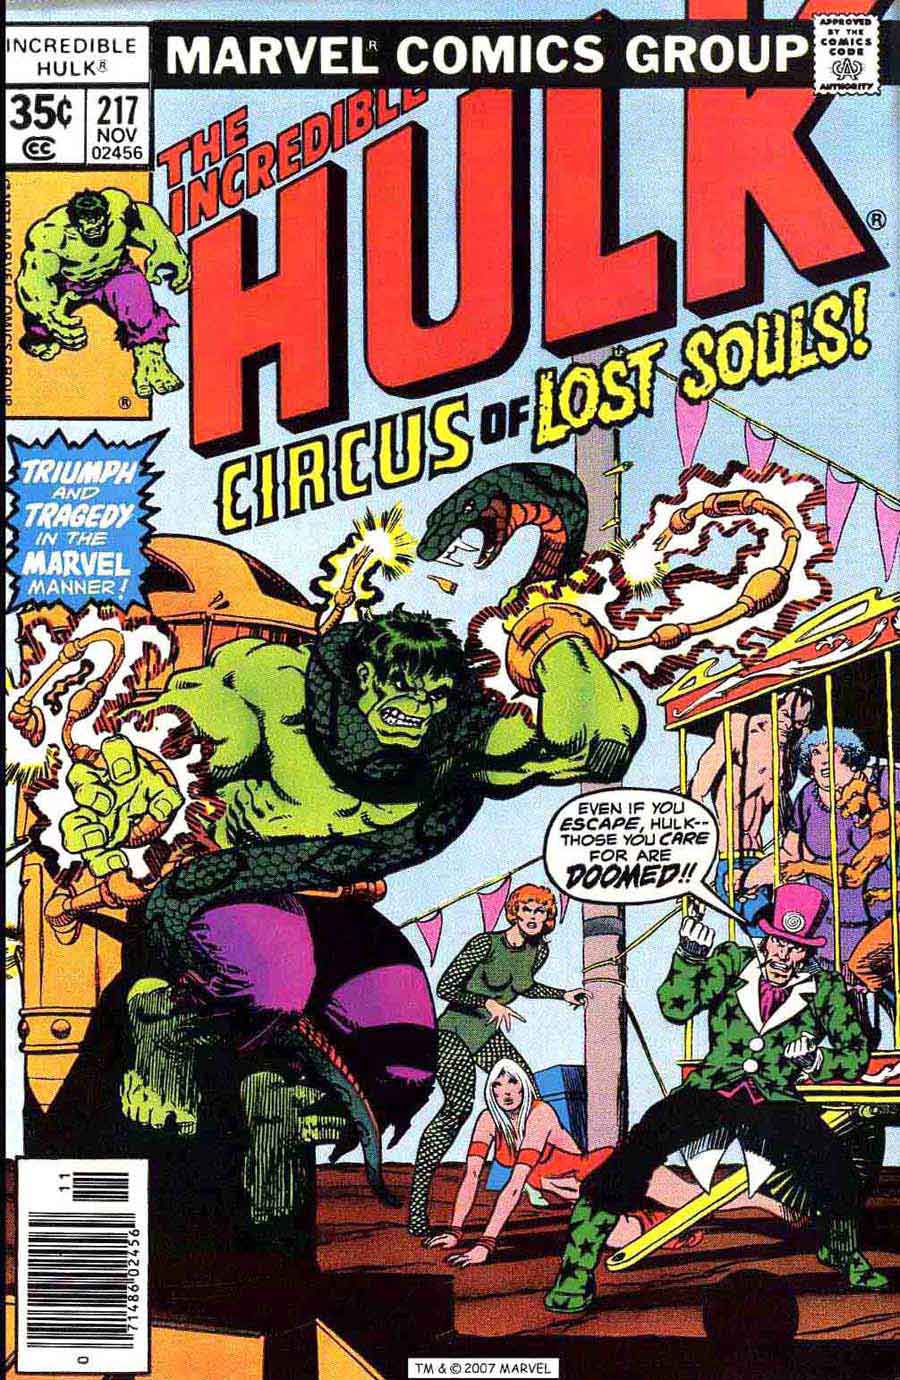 Incredible Hulk v2 #217 marvel comic book cover art by Jim Starlin